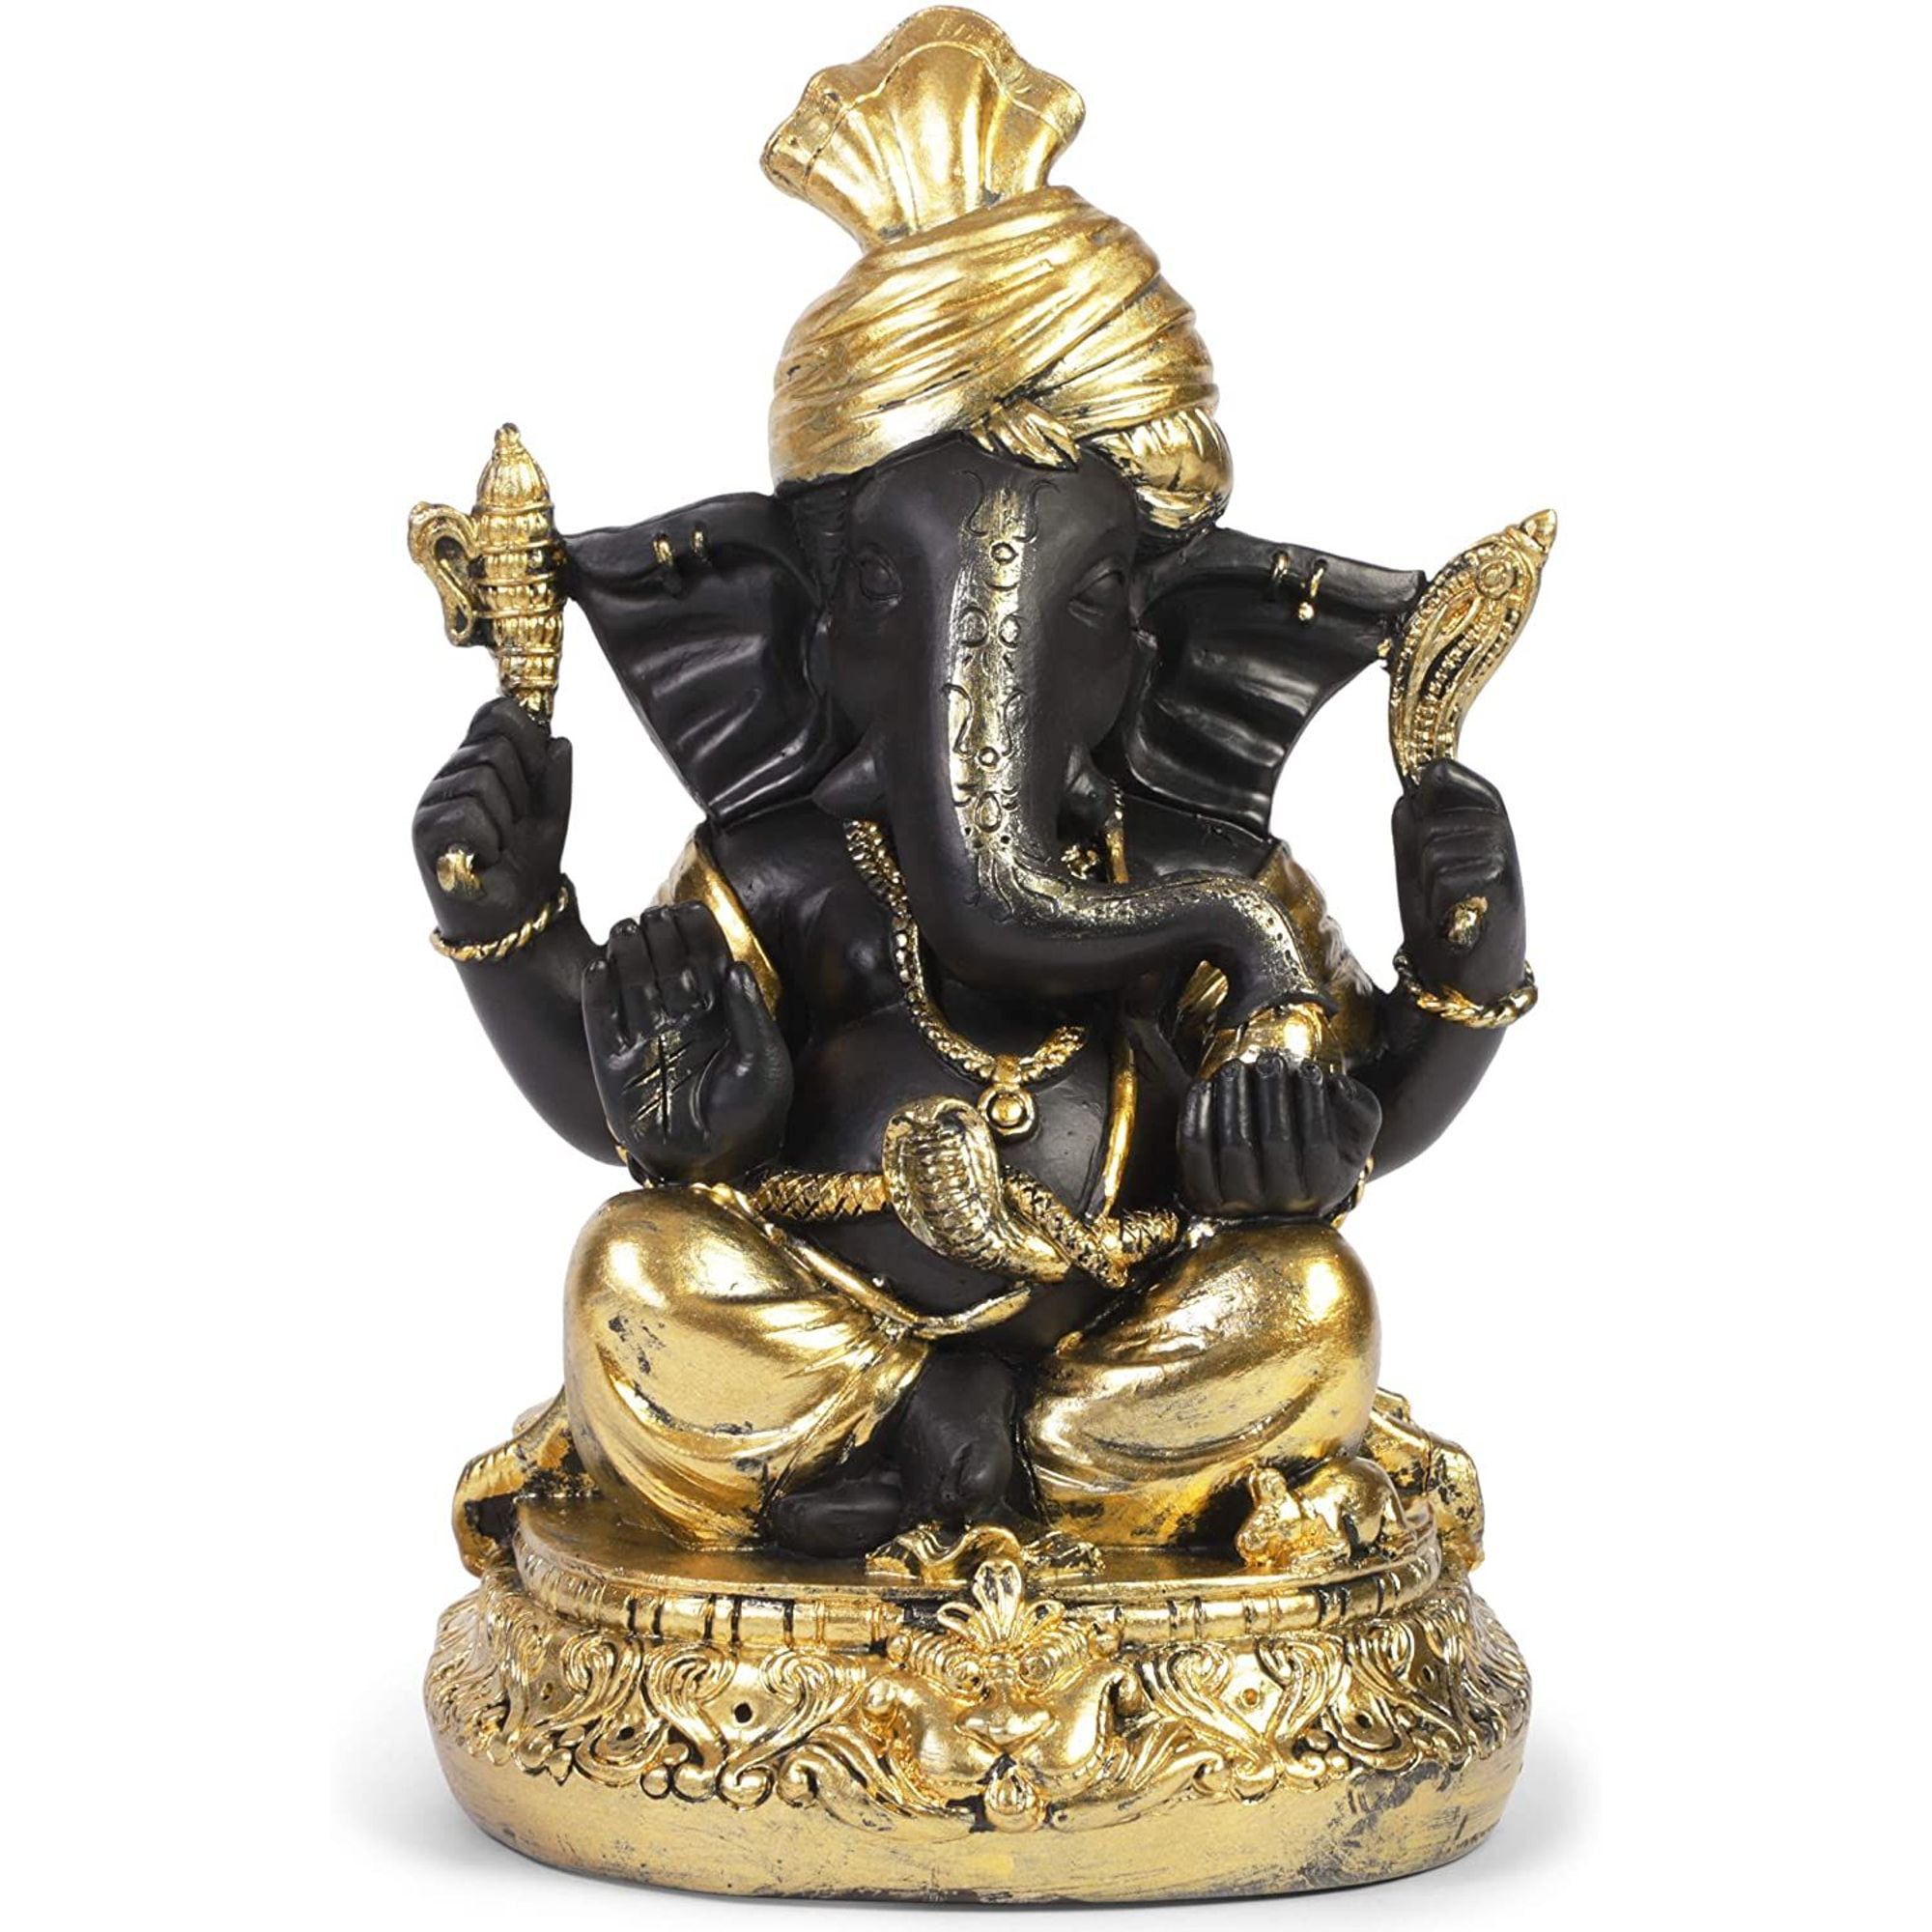 Sandstone Ganesh Statue Hindu Buddha Elephant God Sculpture Hand Carved Resin Handmade Figurine